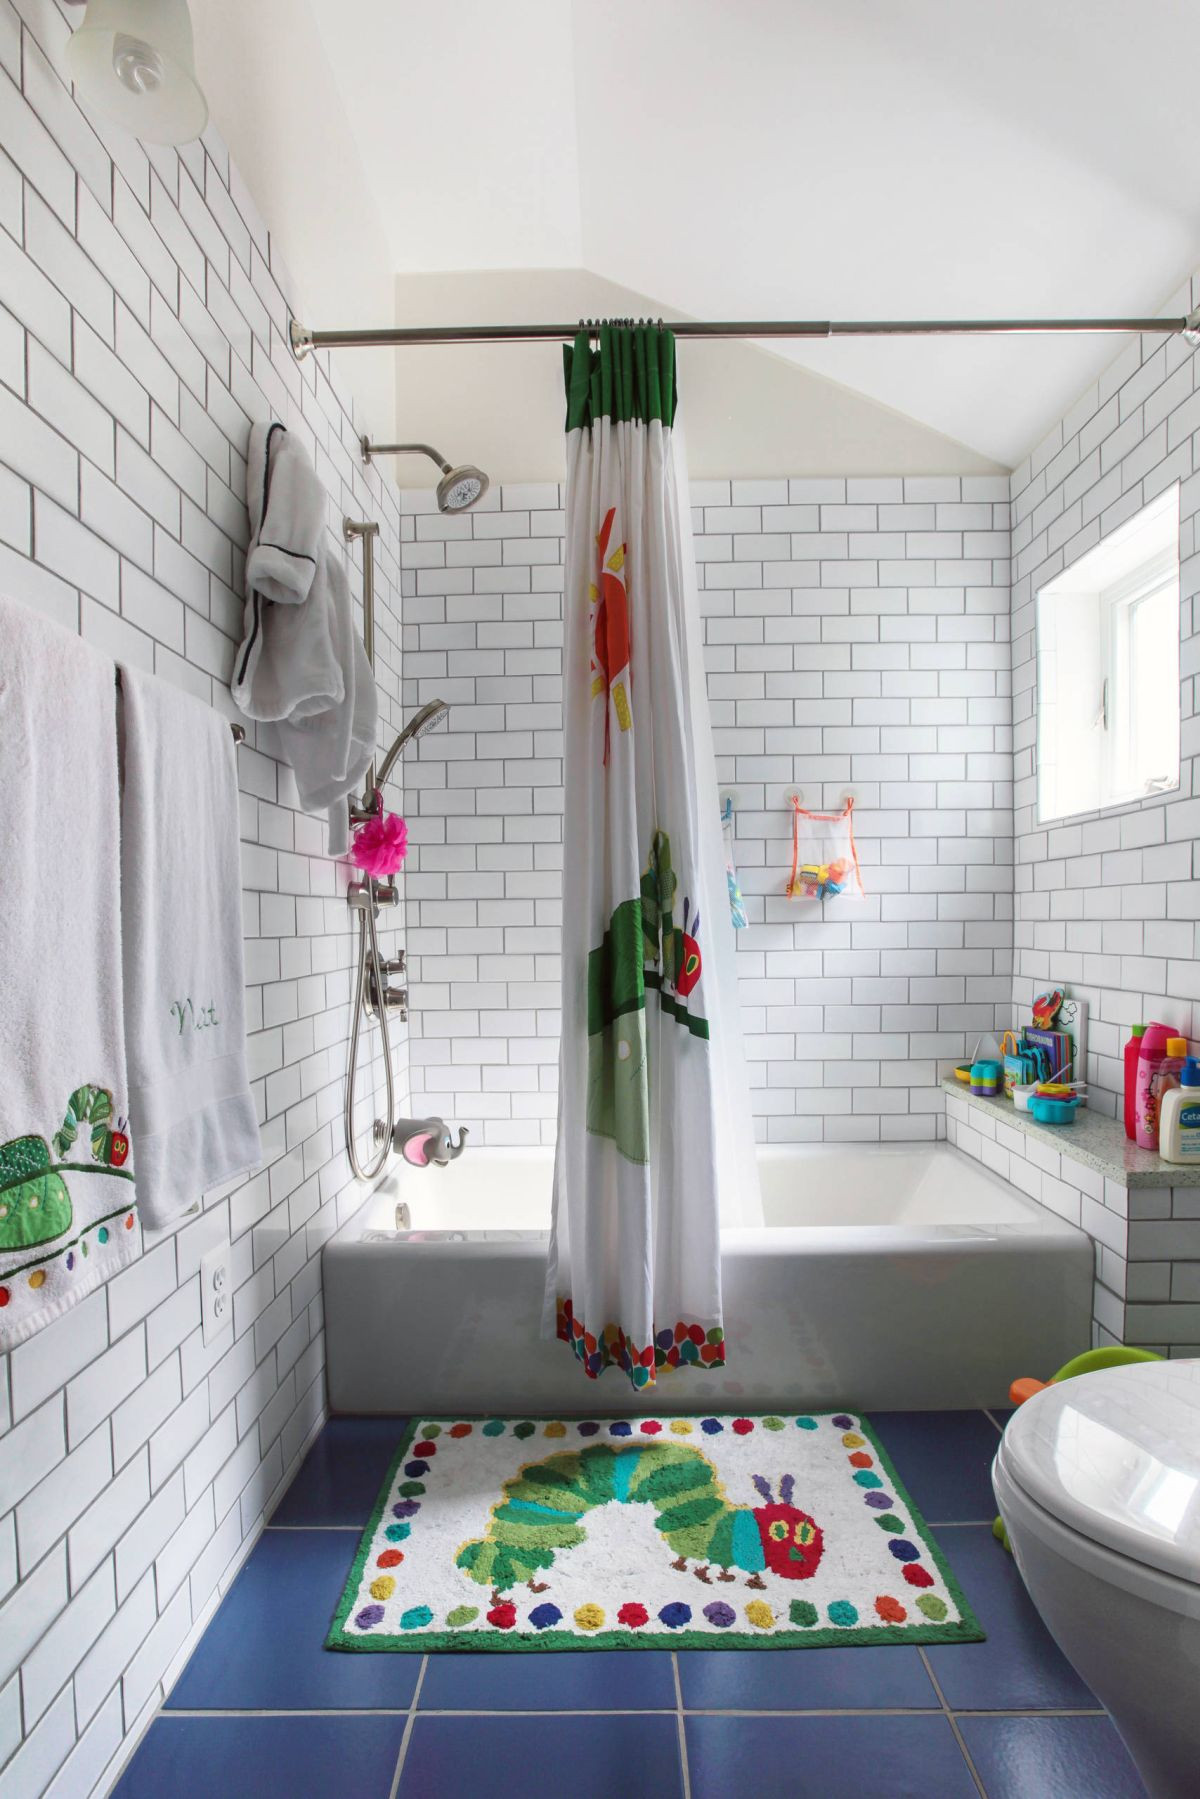 Kids Bathroom Set
 12 Tips for The Best Kids Bathroom Decor